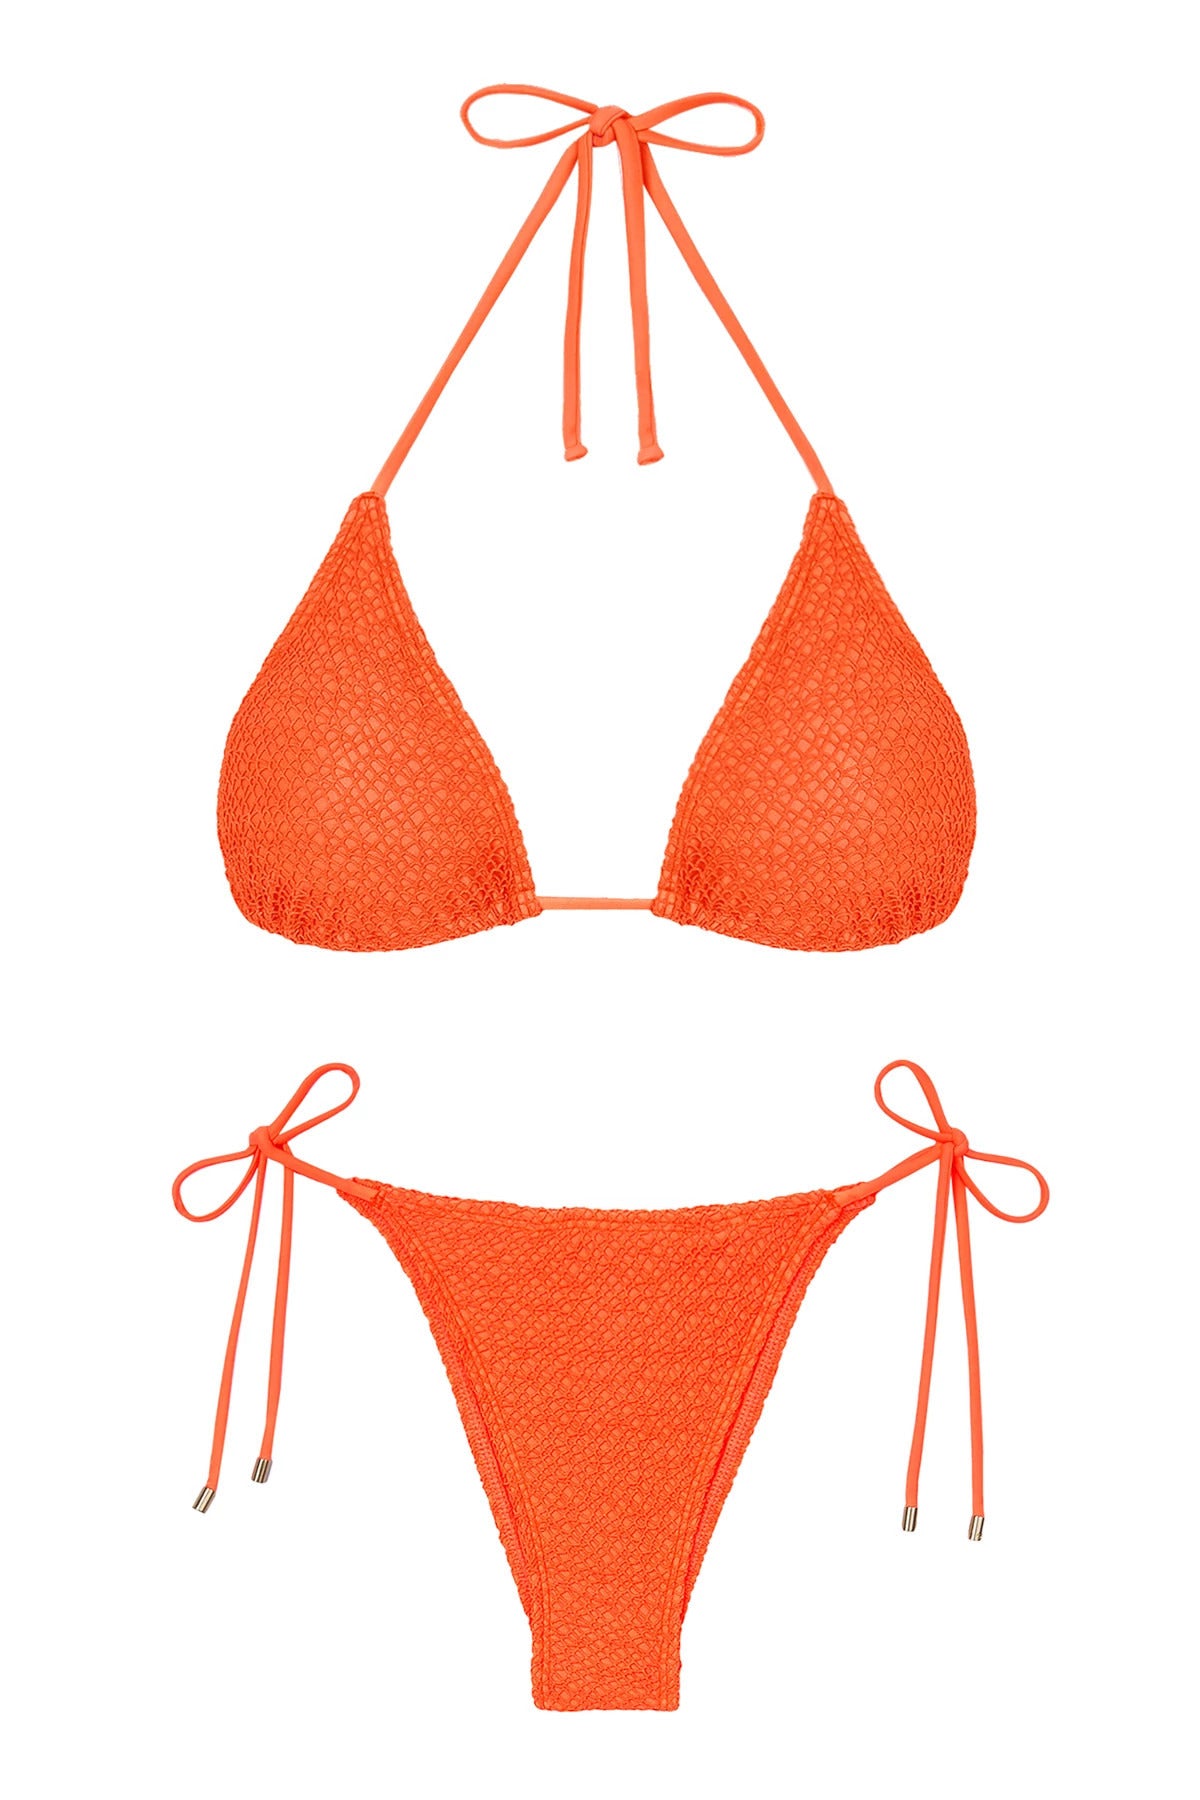 Vix Swimwear Women's Tie Side Brazilian Bikini Bottom - ORANGE